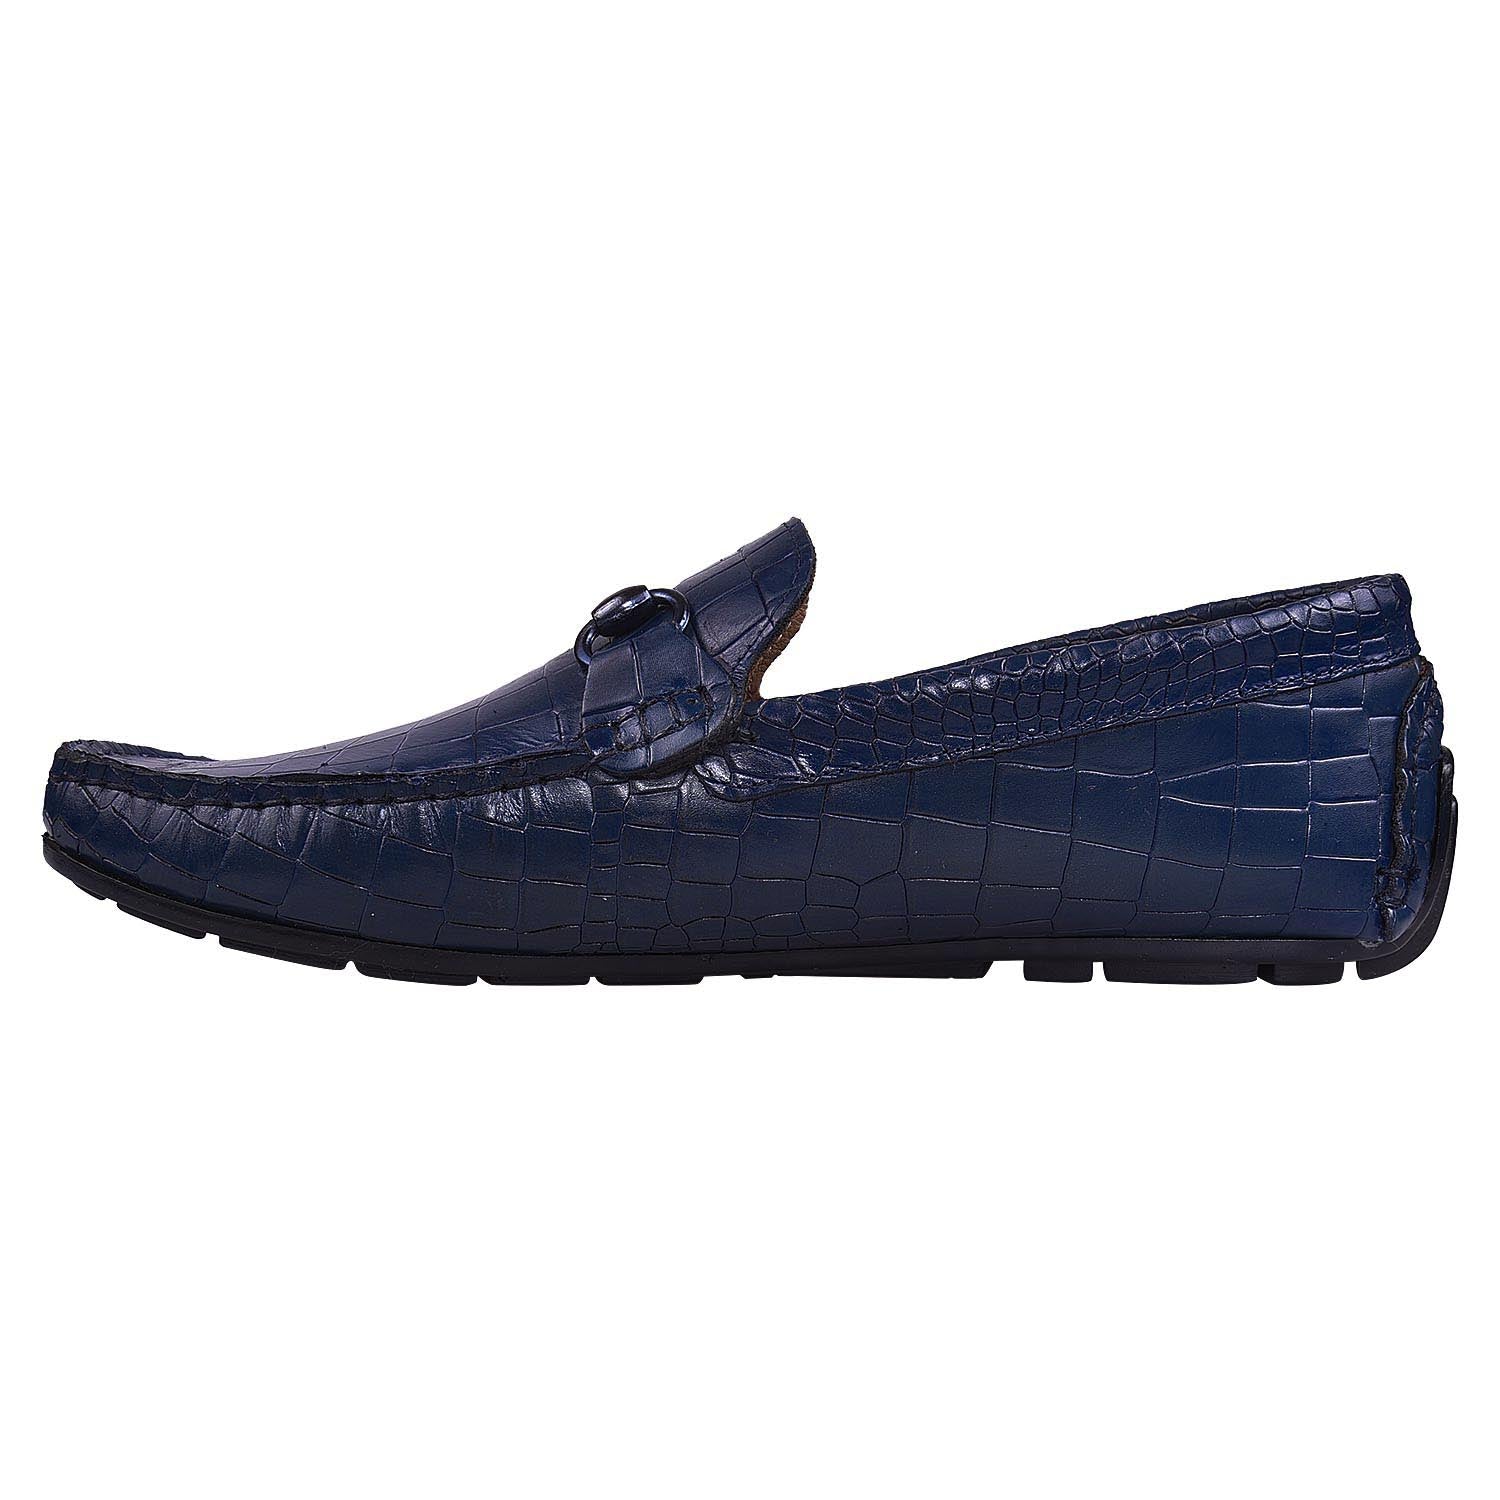 Croco Blue Loafer Shoes For Men